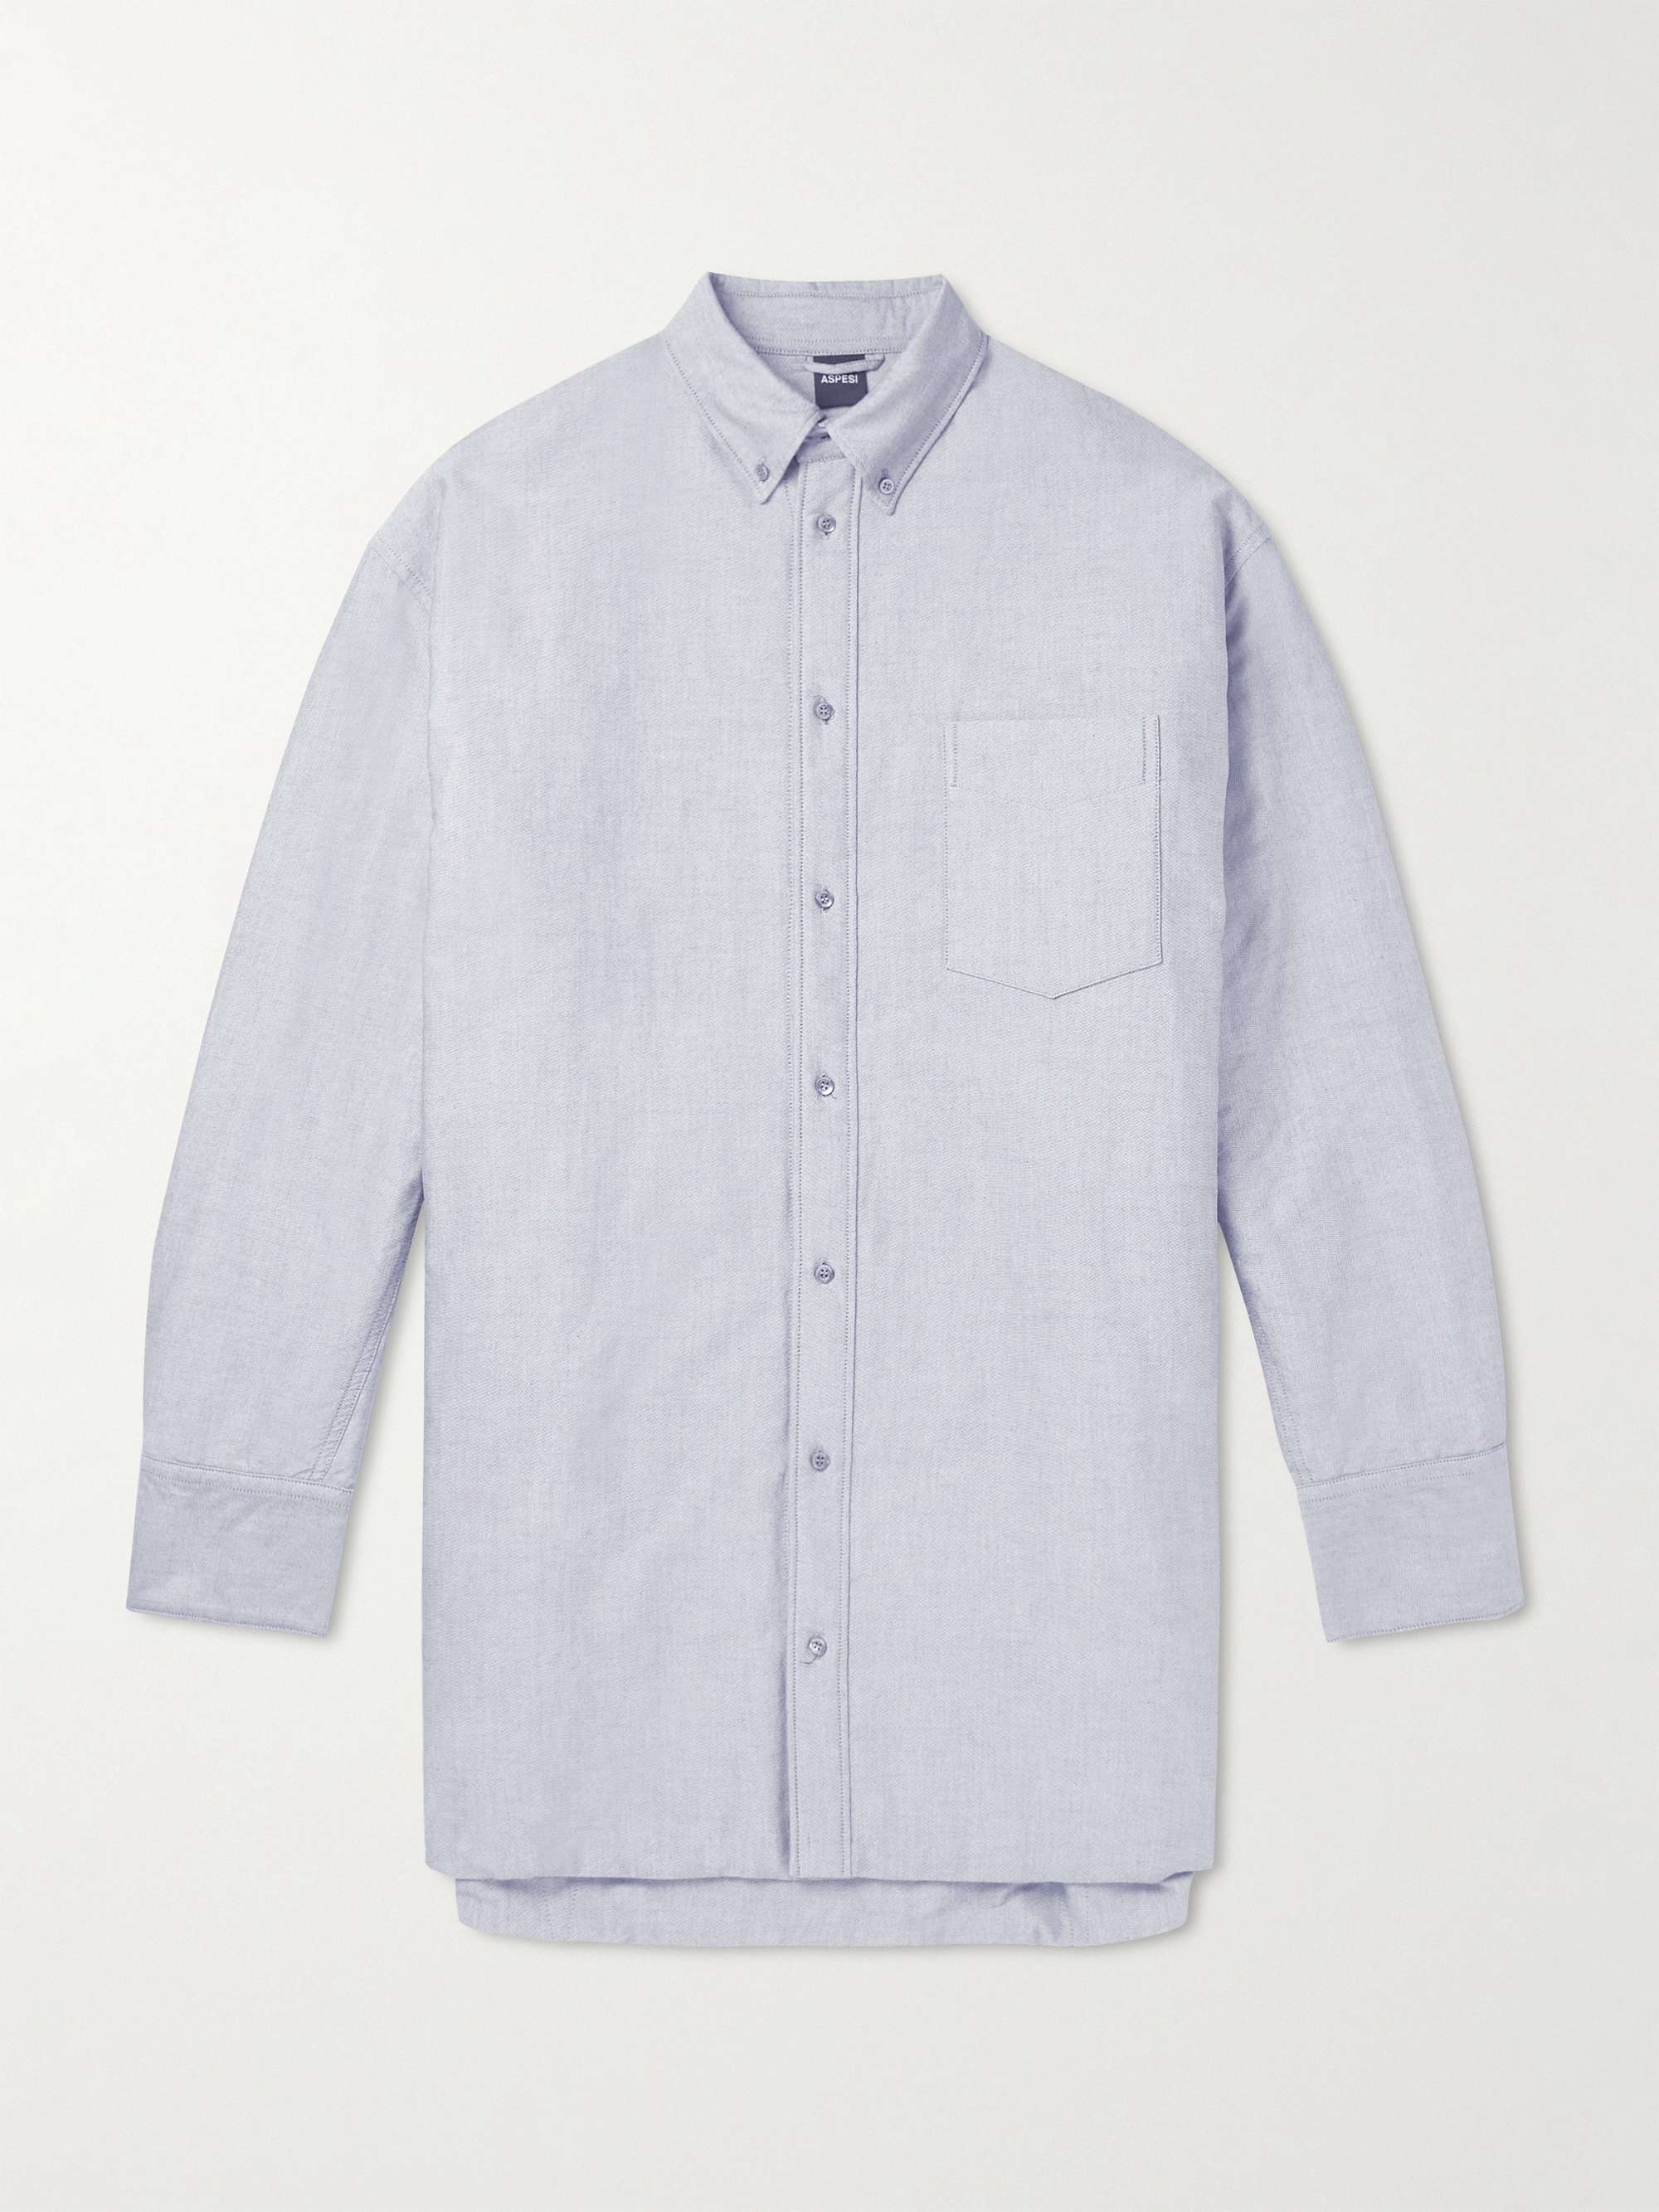 ASPESI Button-Down Collar Padded Cotton Oxford Shirt